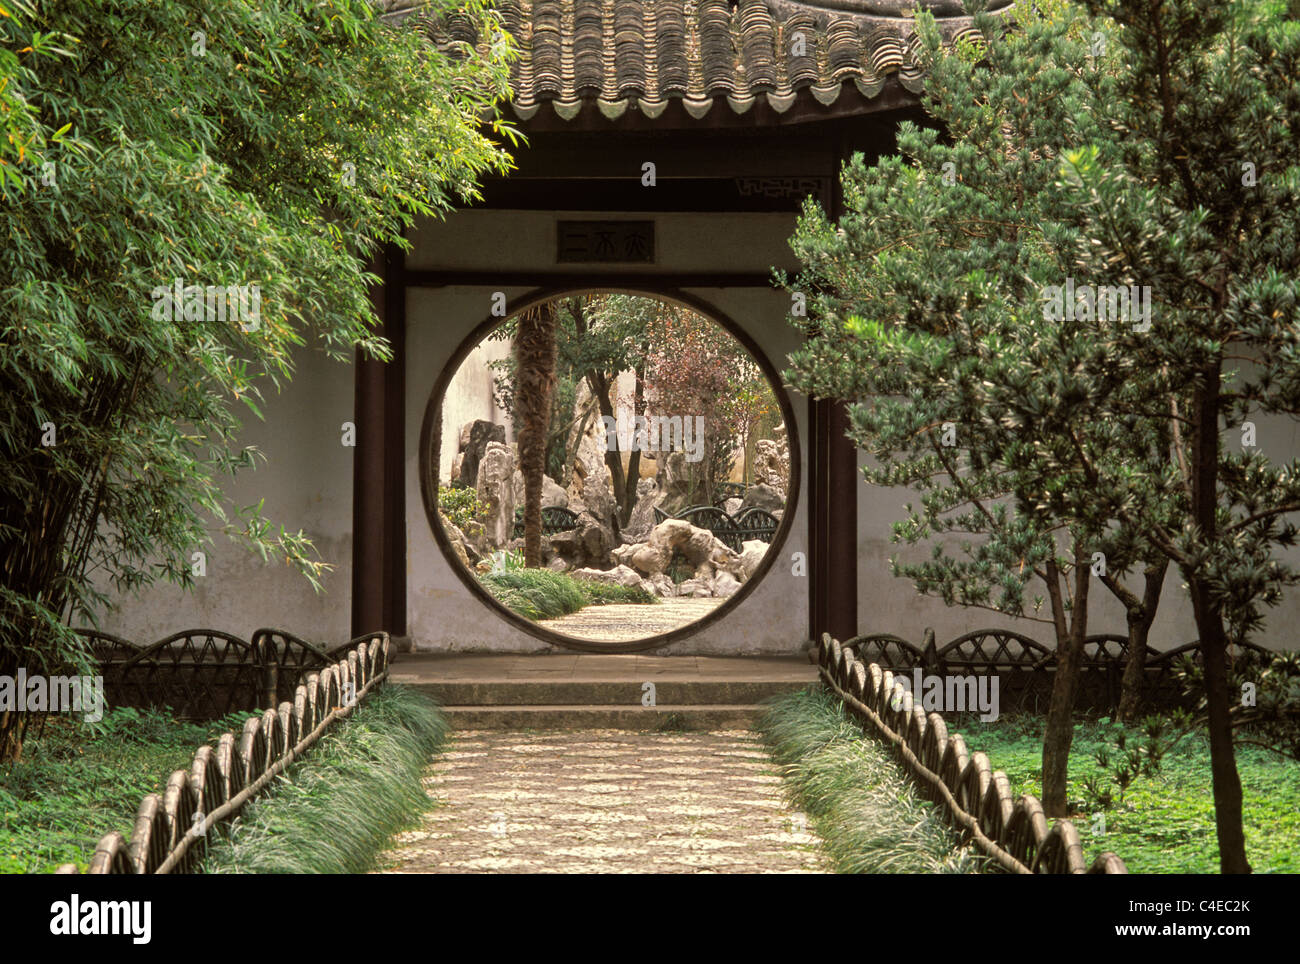 Moon gate at the Lingering Garden (Liu Yuan) located ...
